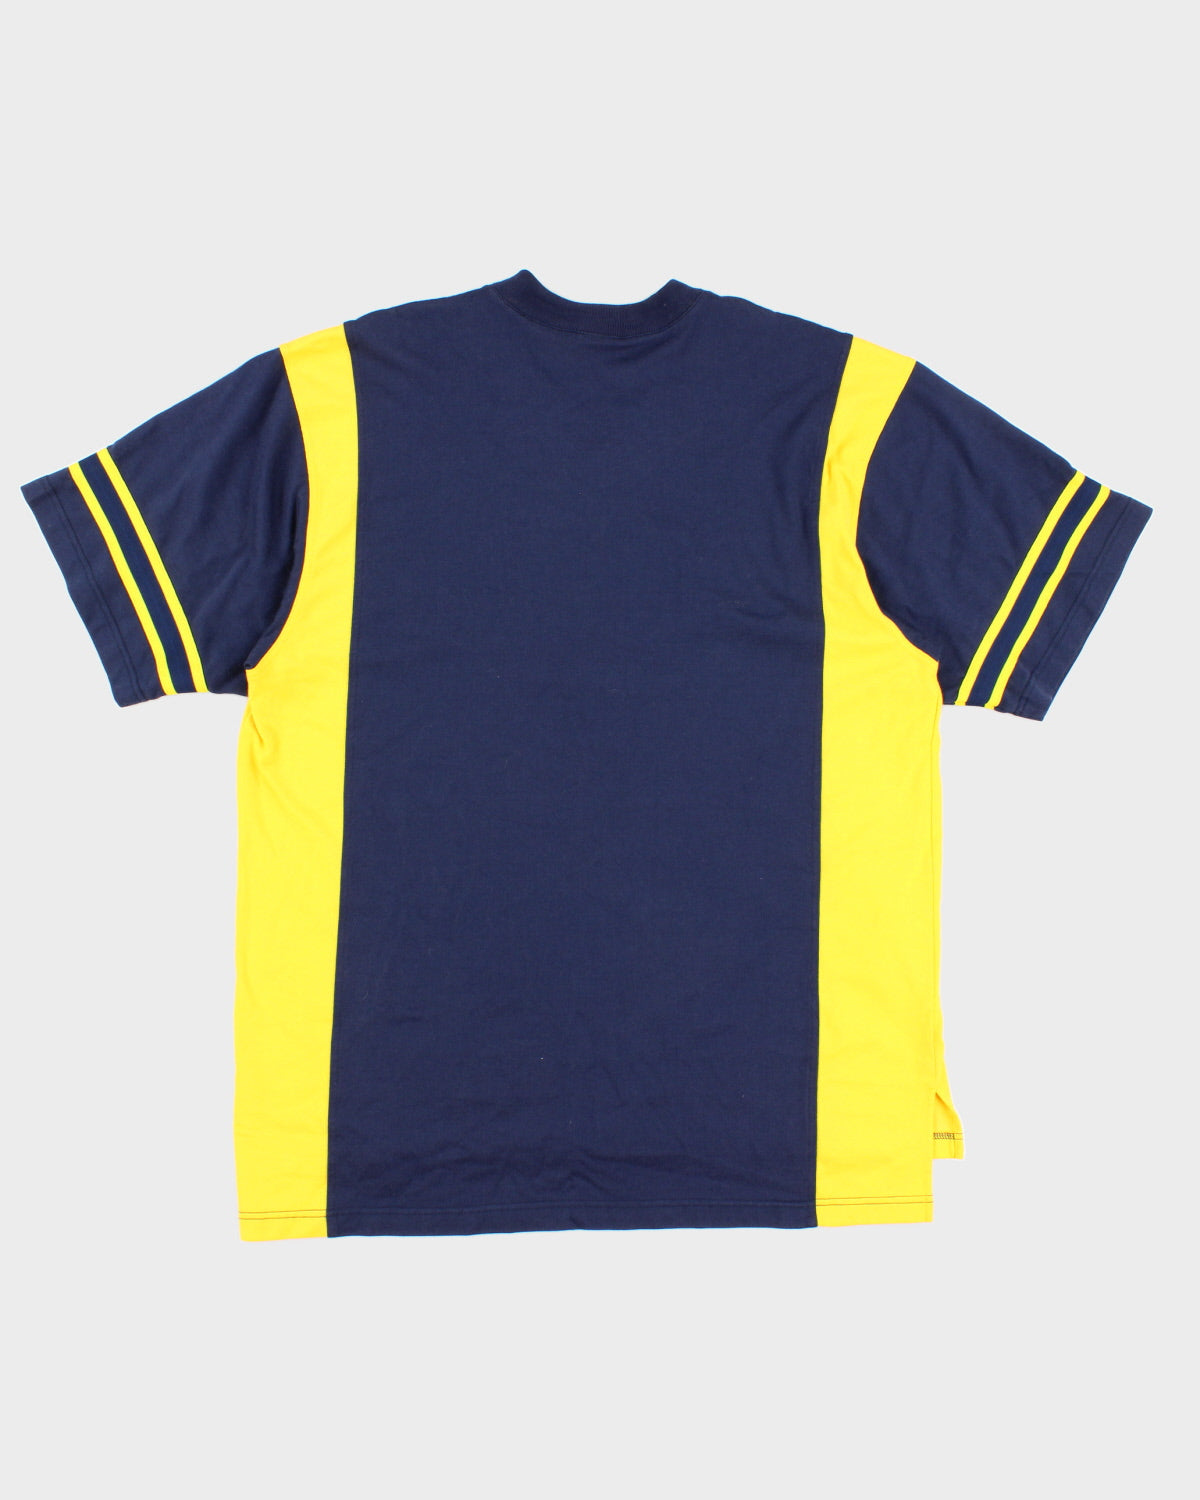 Mens Navy and Yellow Nike Sports Shirt - XL